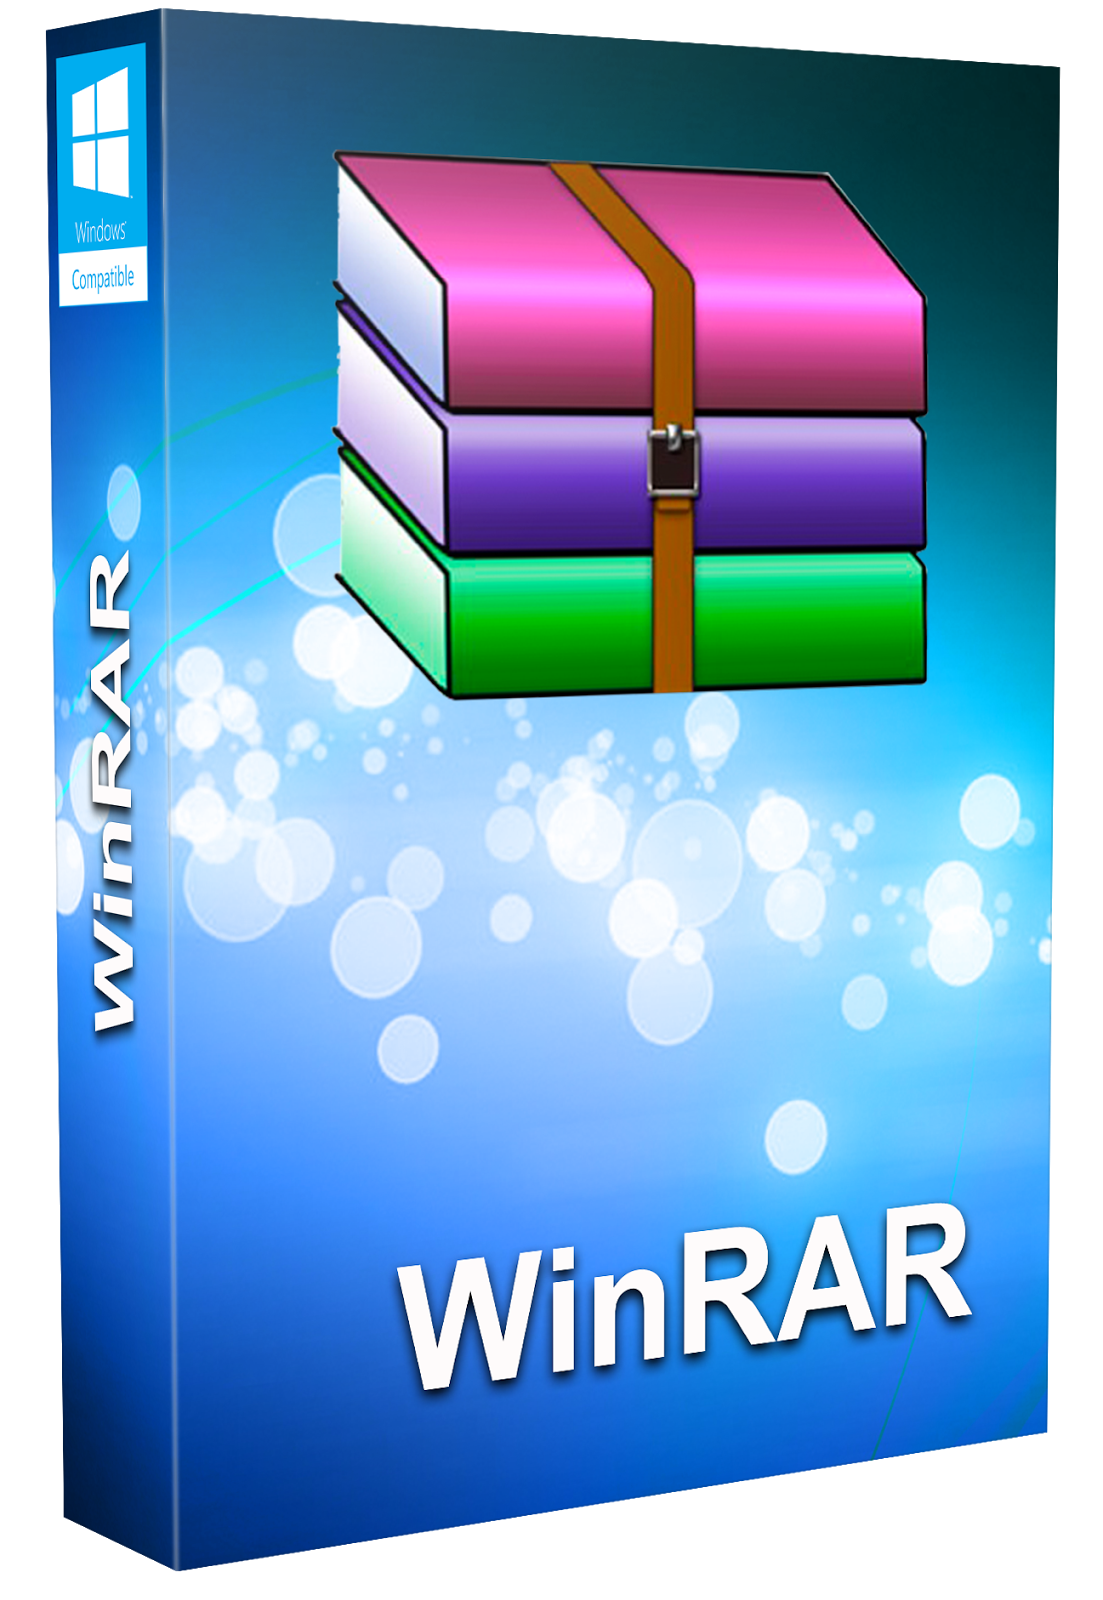 Rar unzip free download for windows 10